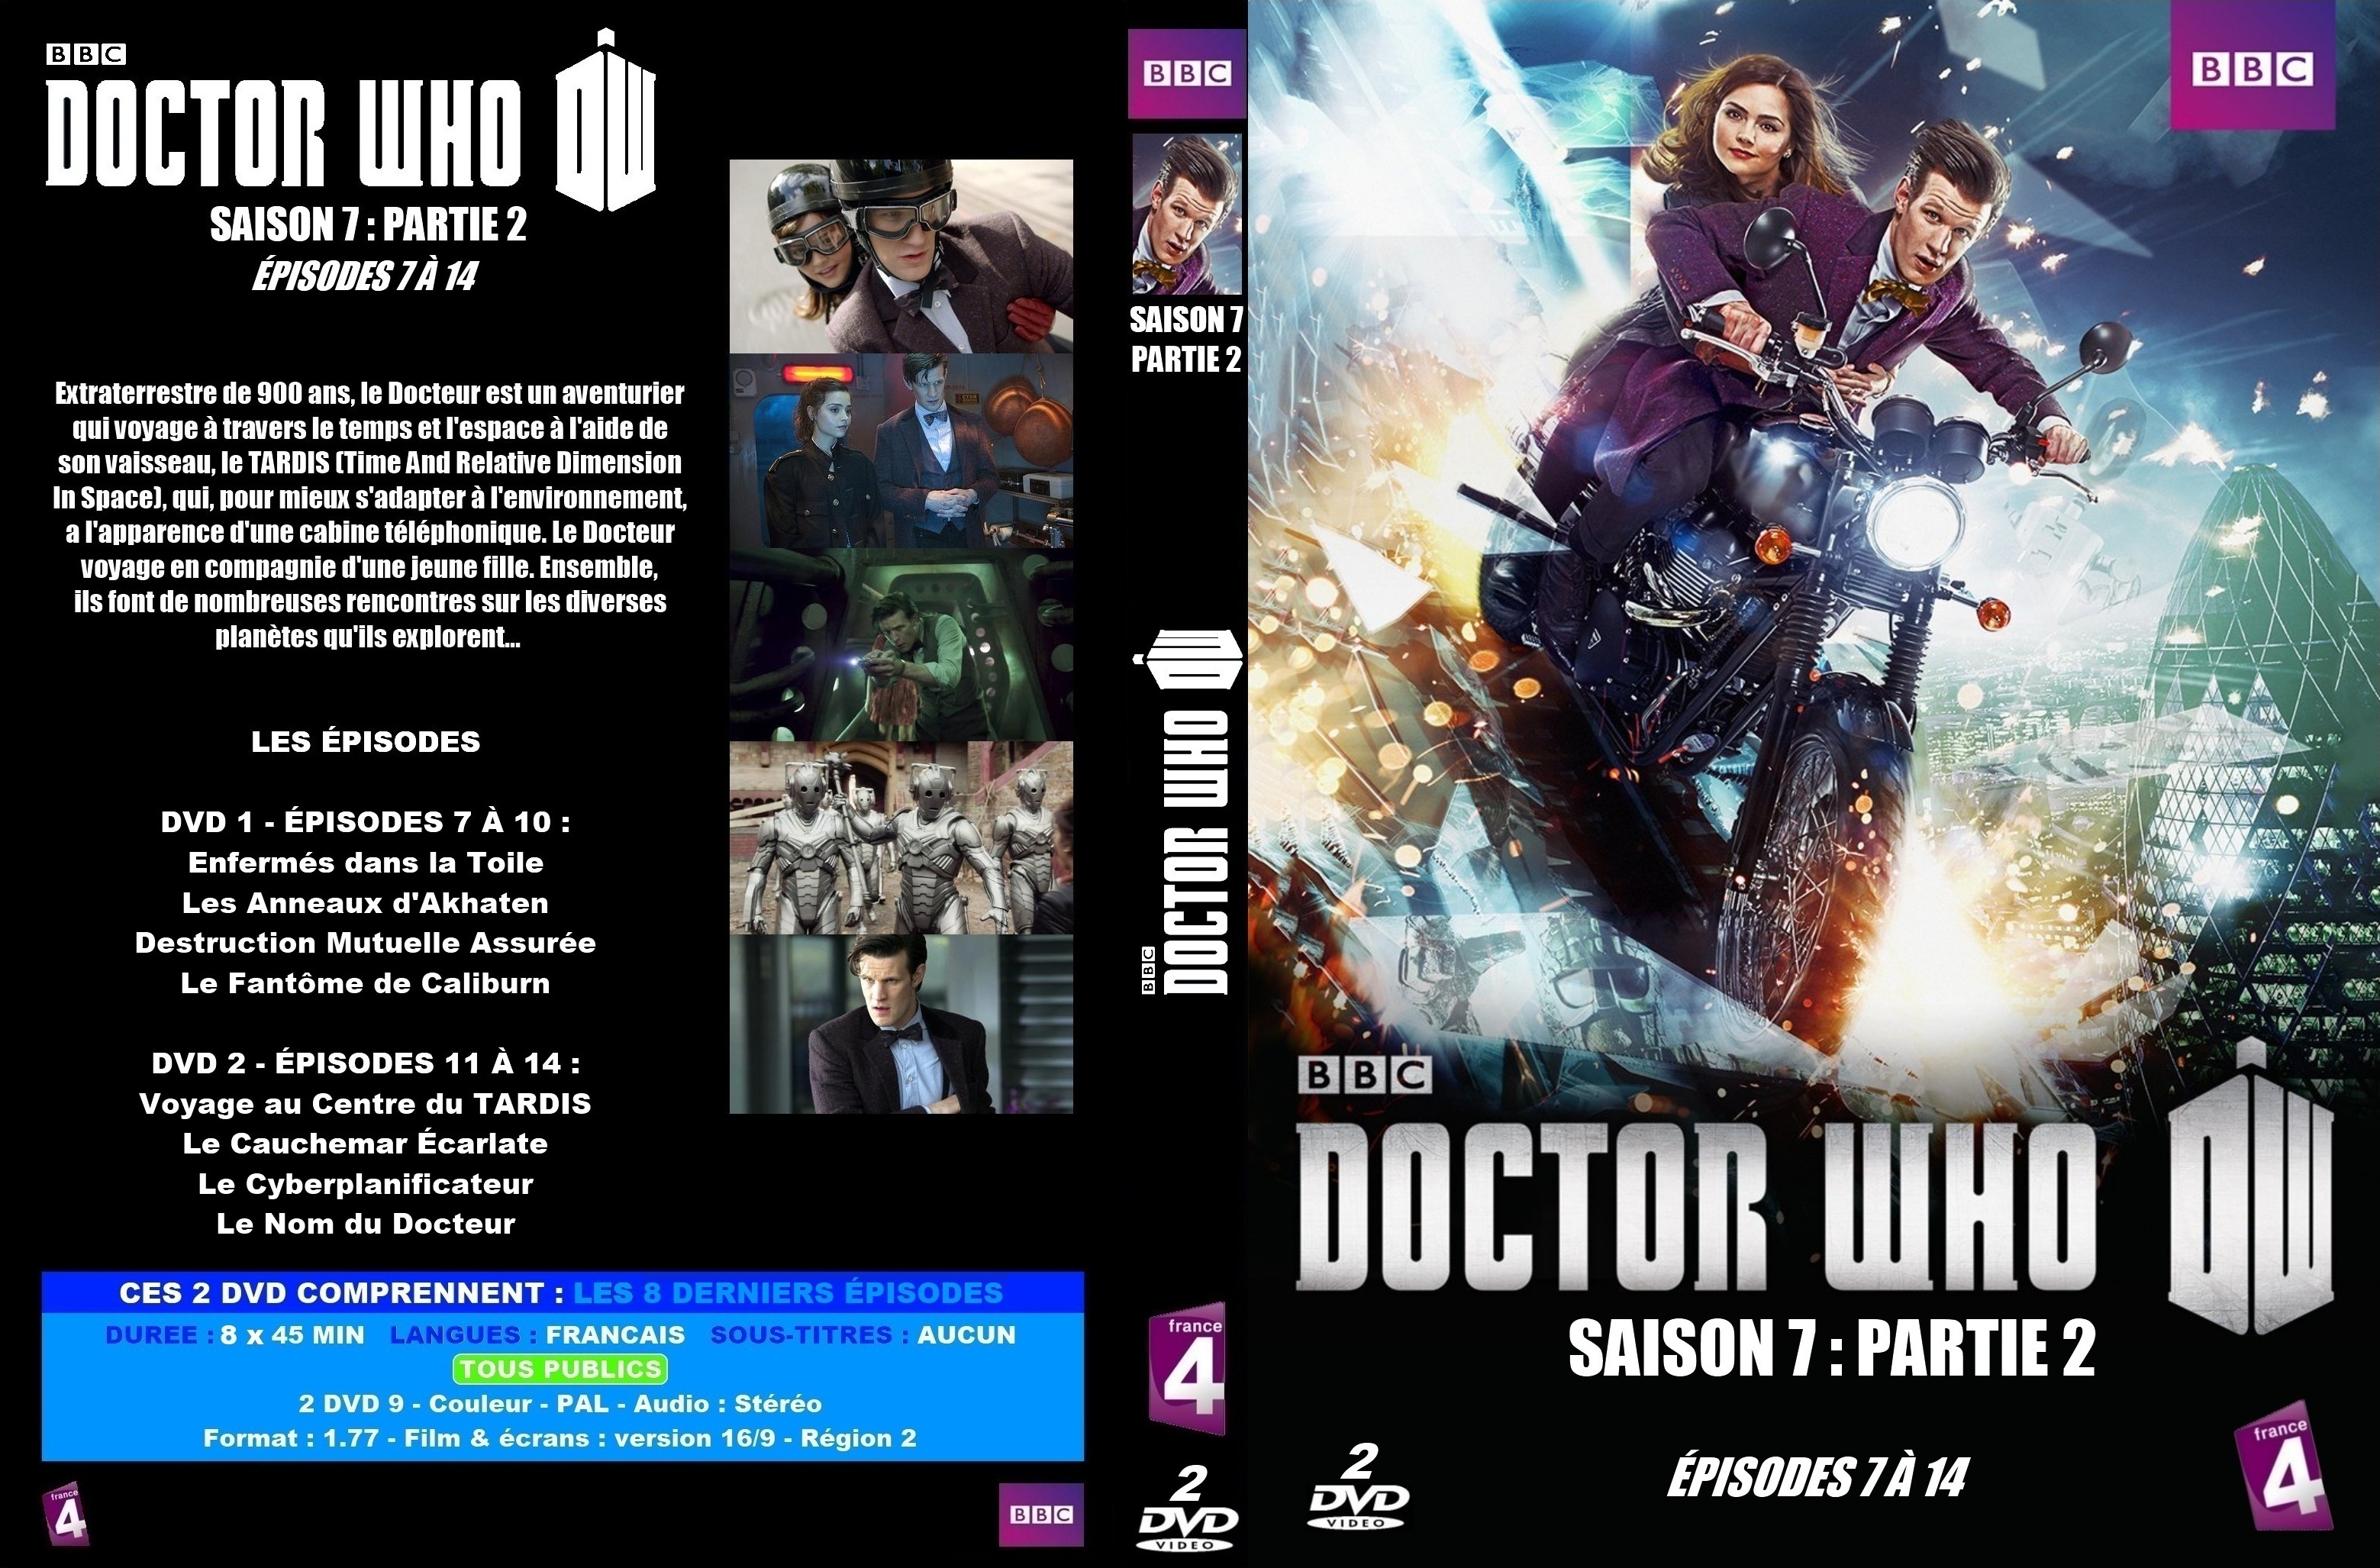 Jaquette DVD Doctor Who Saison 7 Episode 7  14 custom